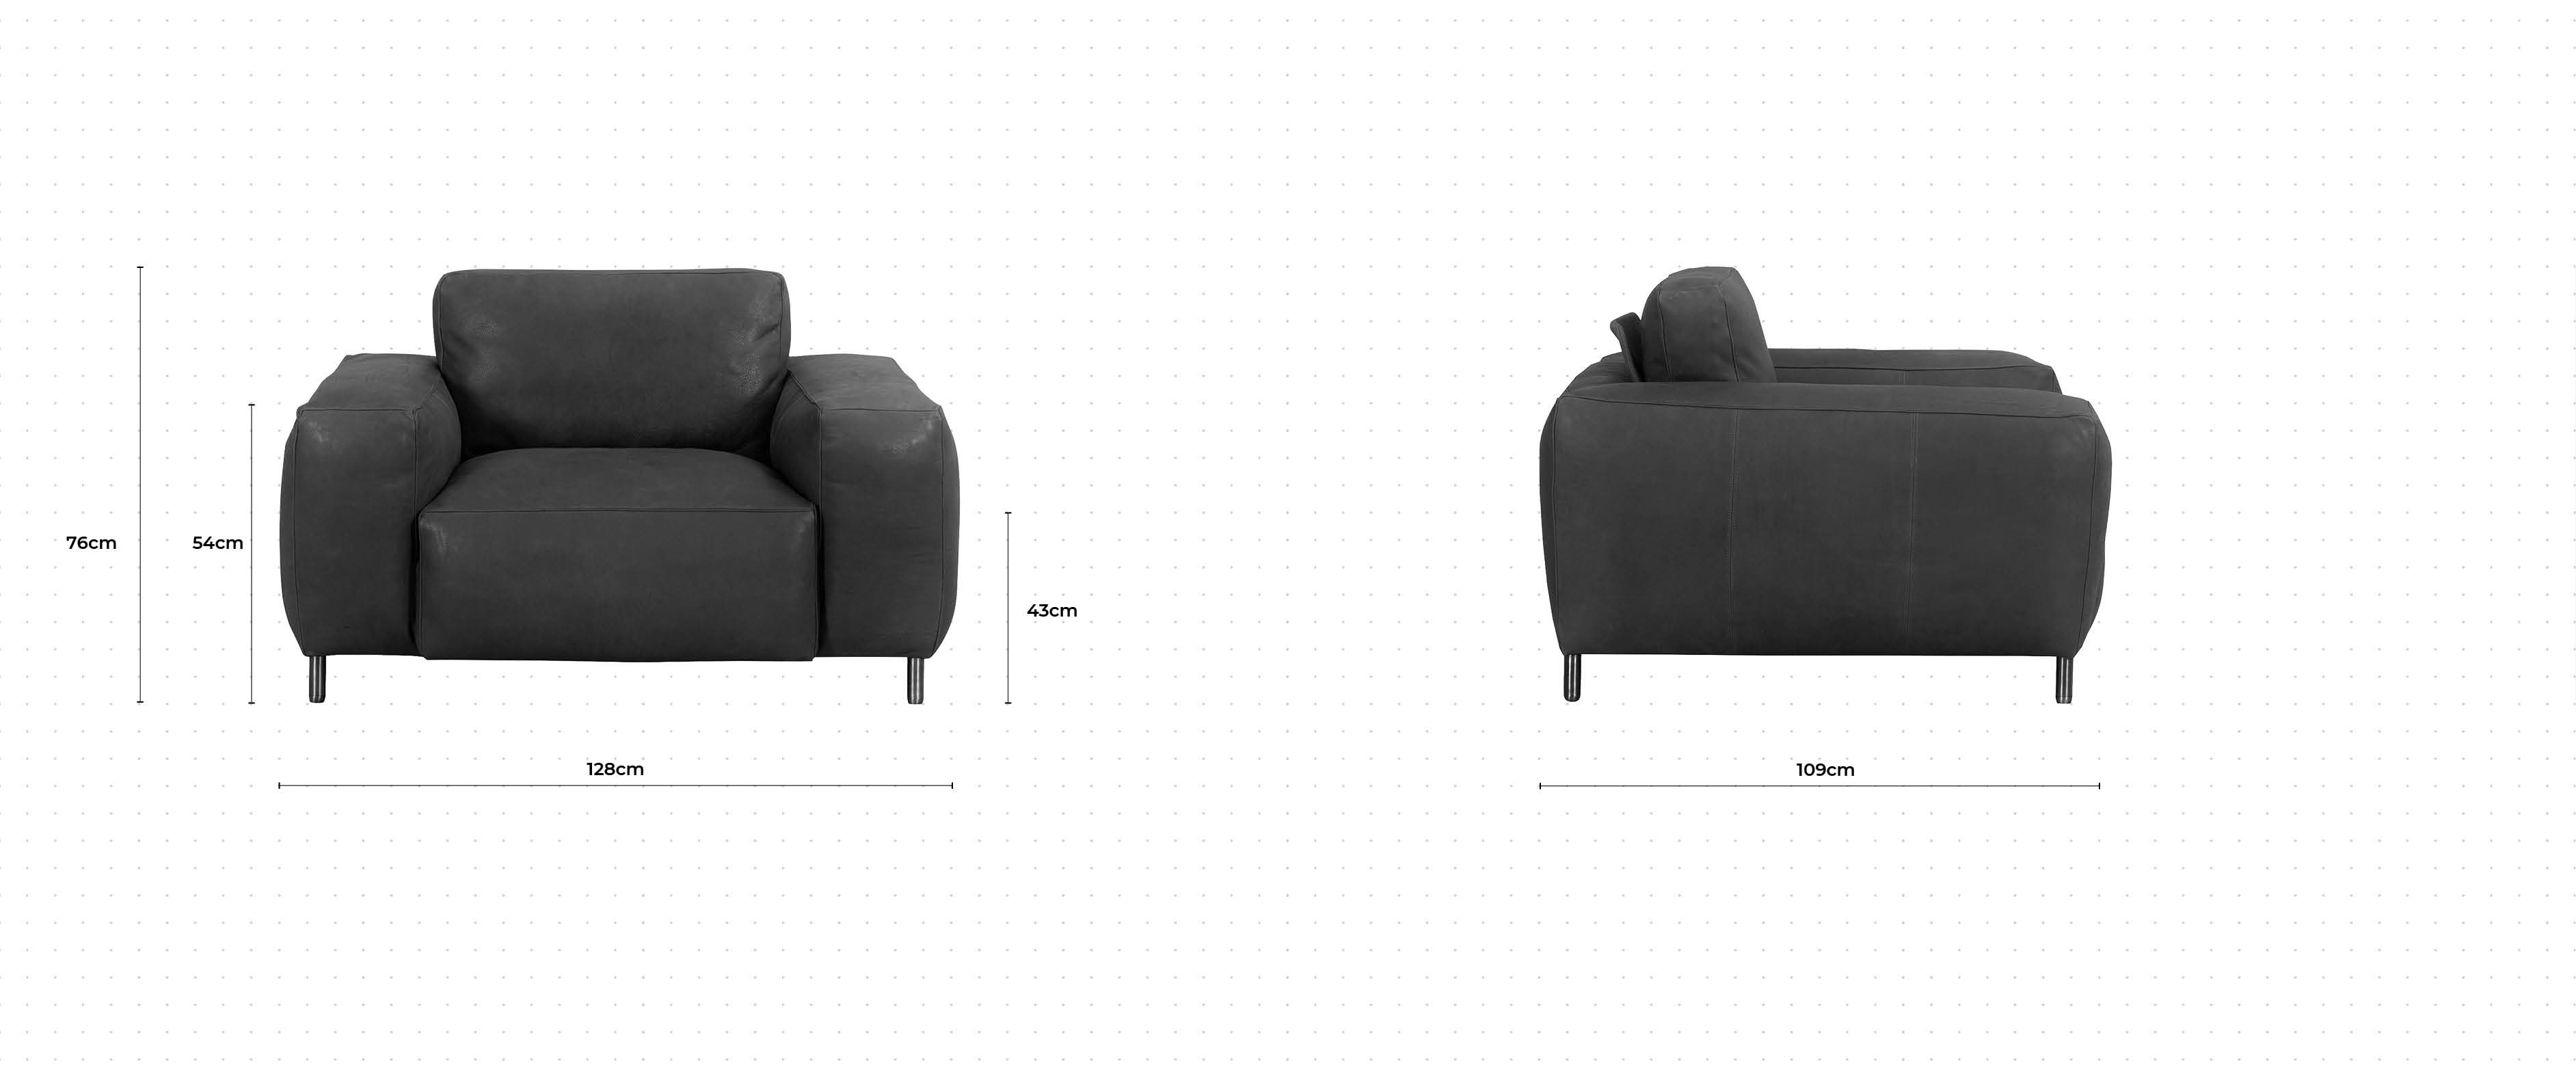 Fudge Armchair dimensions